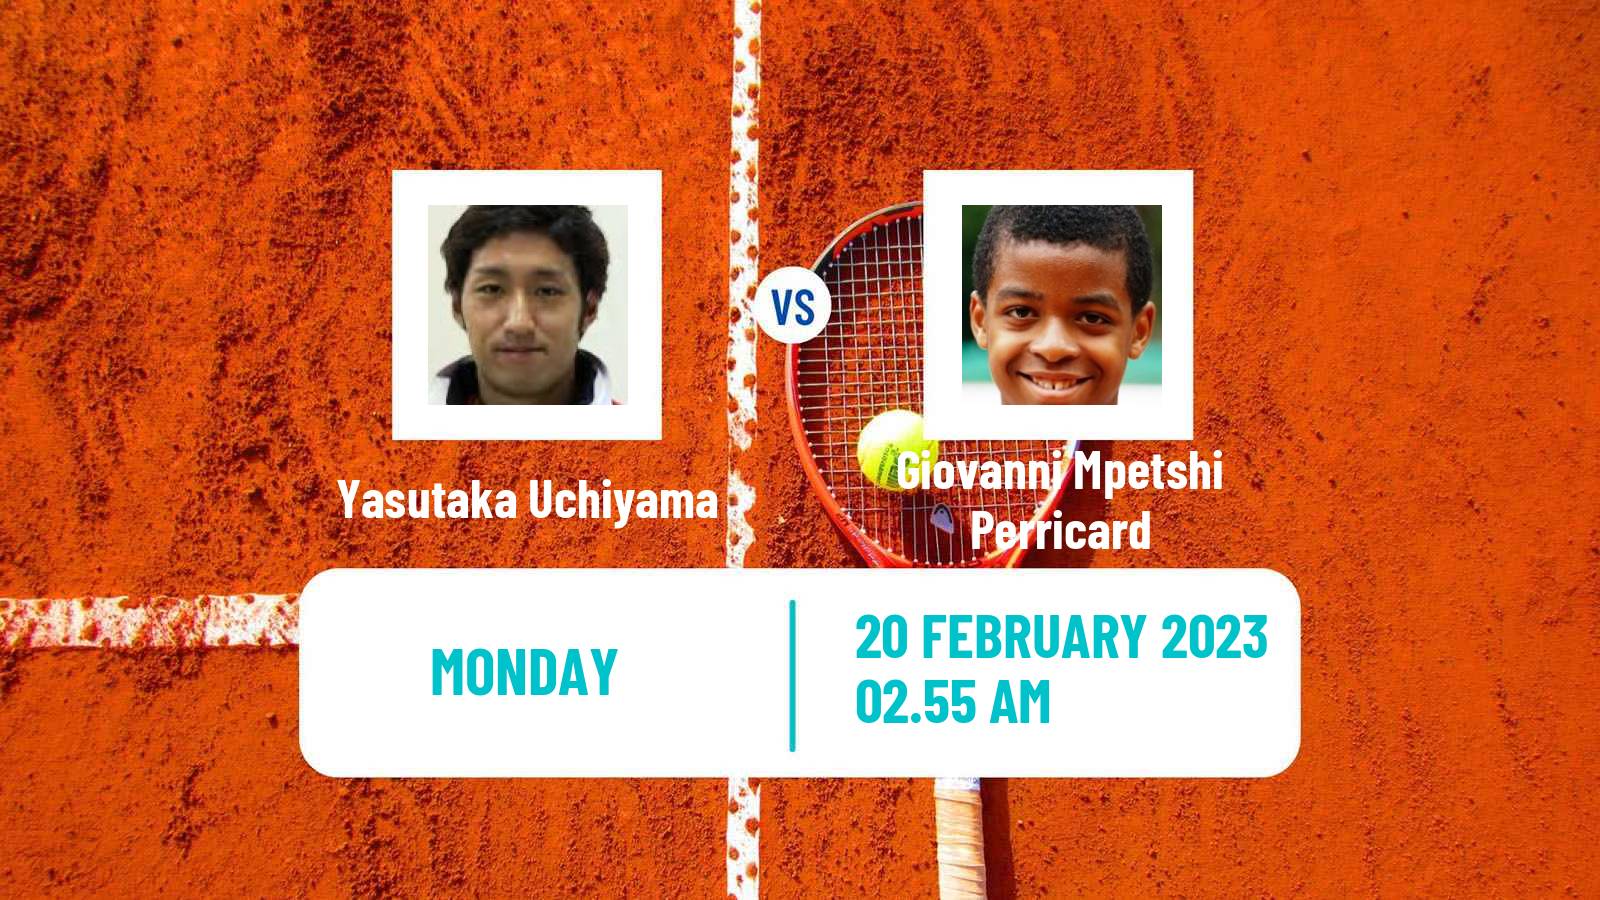 Tennis ATP Challenger Yasutaka Uchiyama - Giovanni Mpetshi Perricard